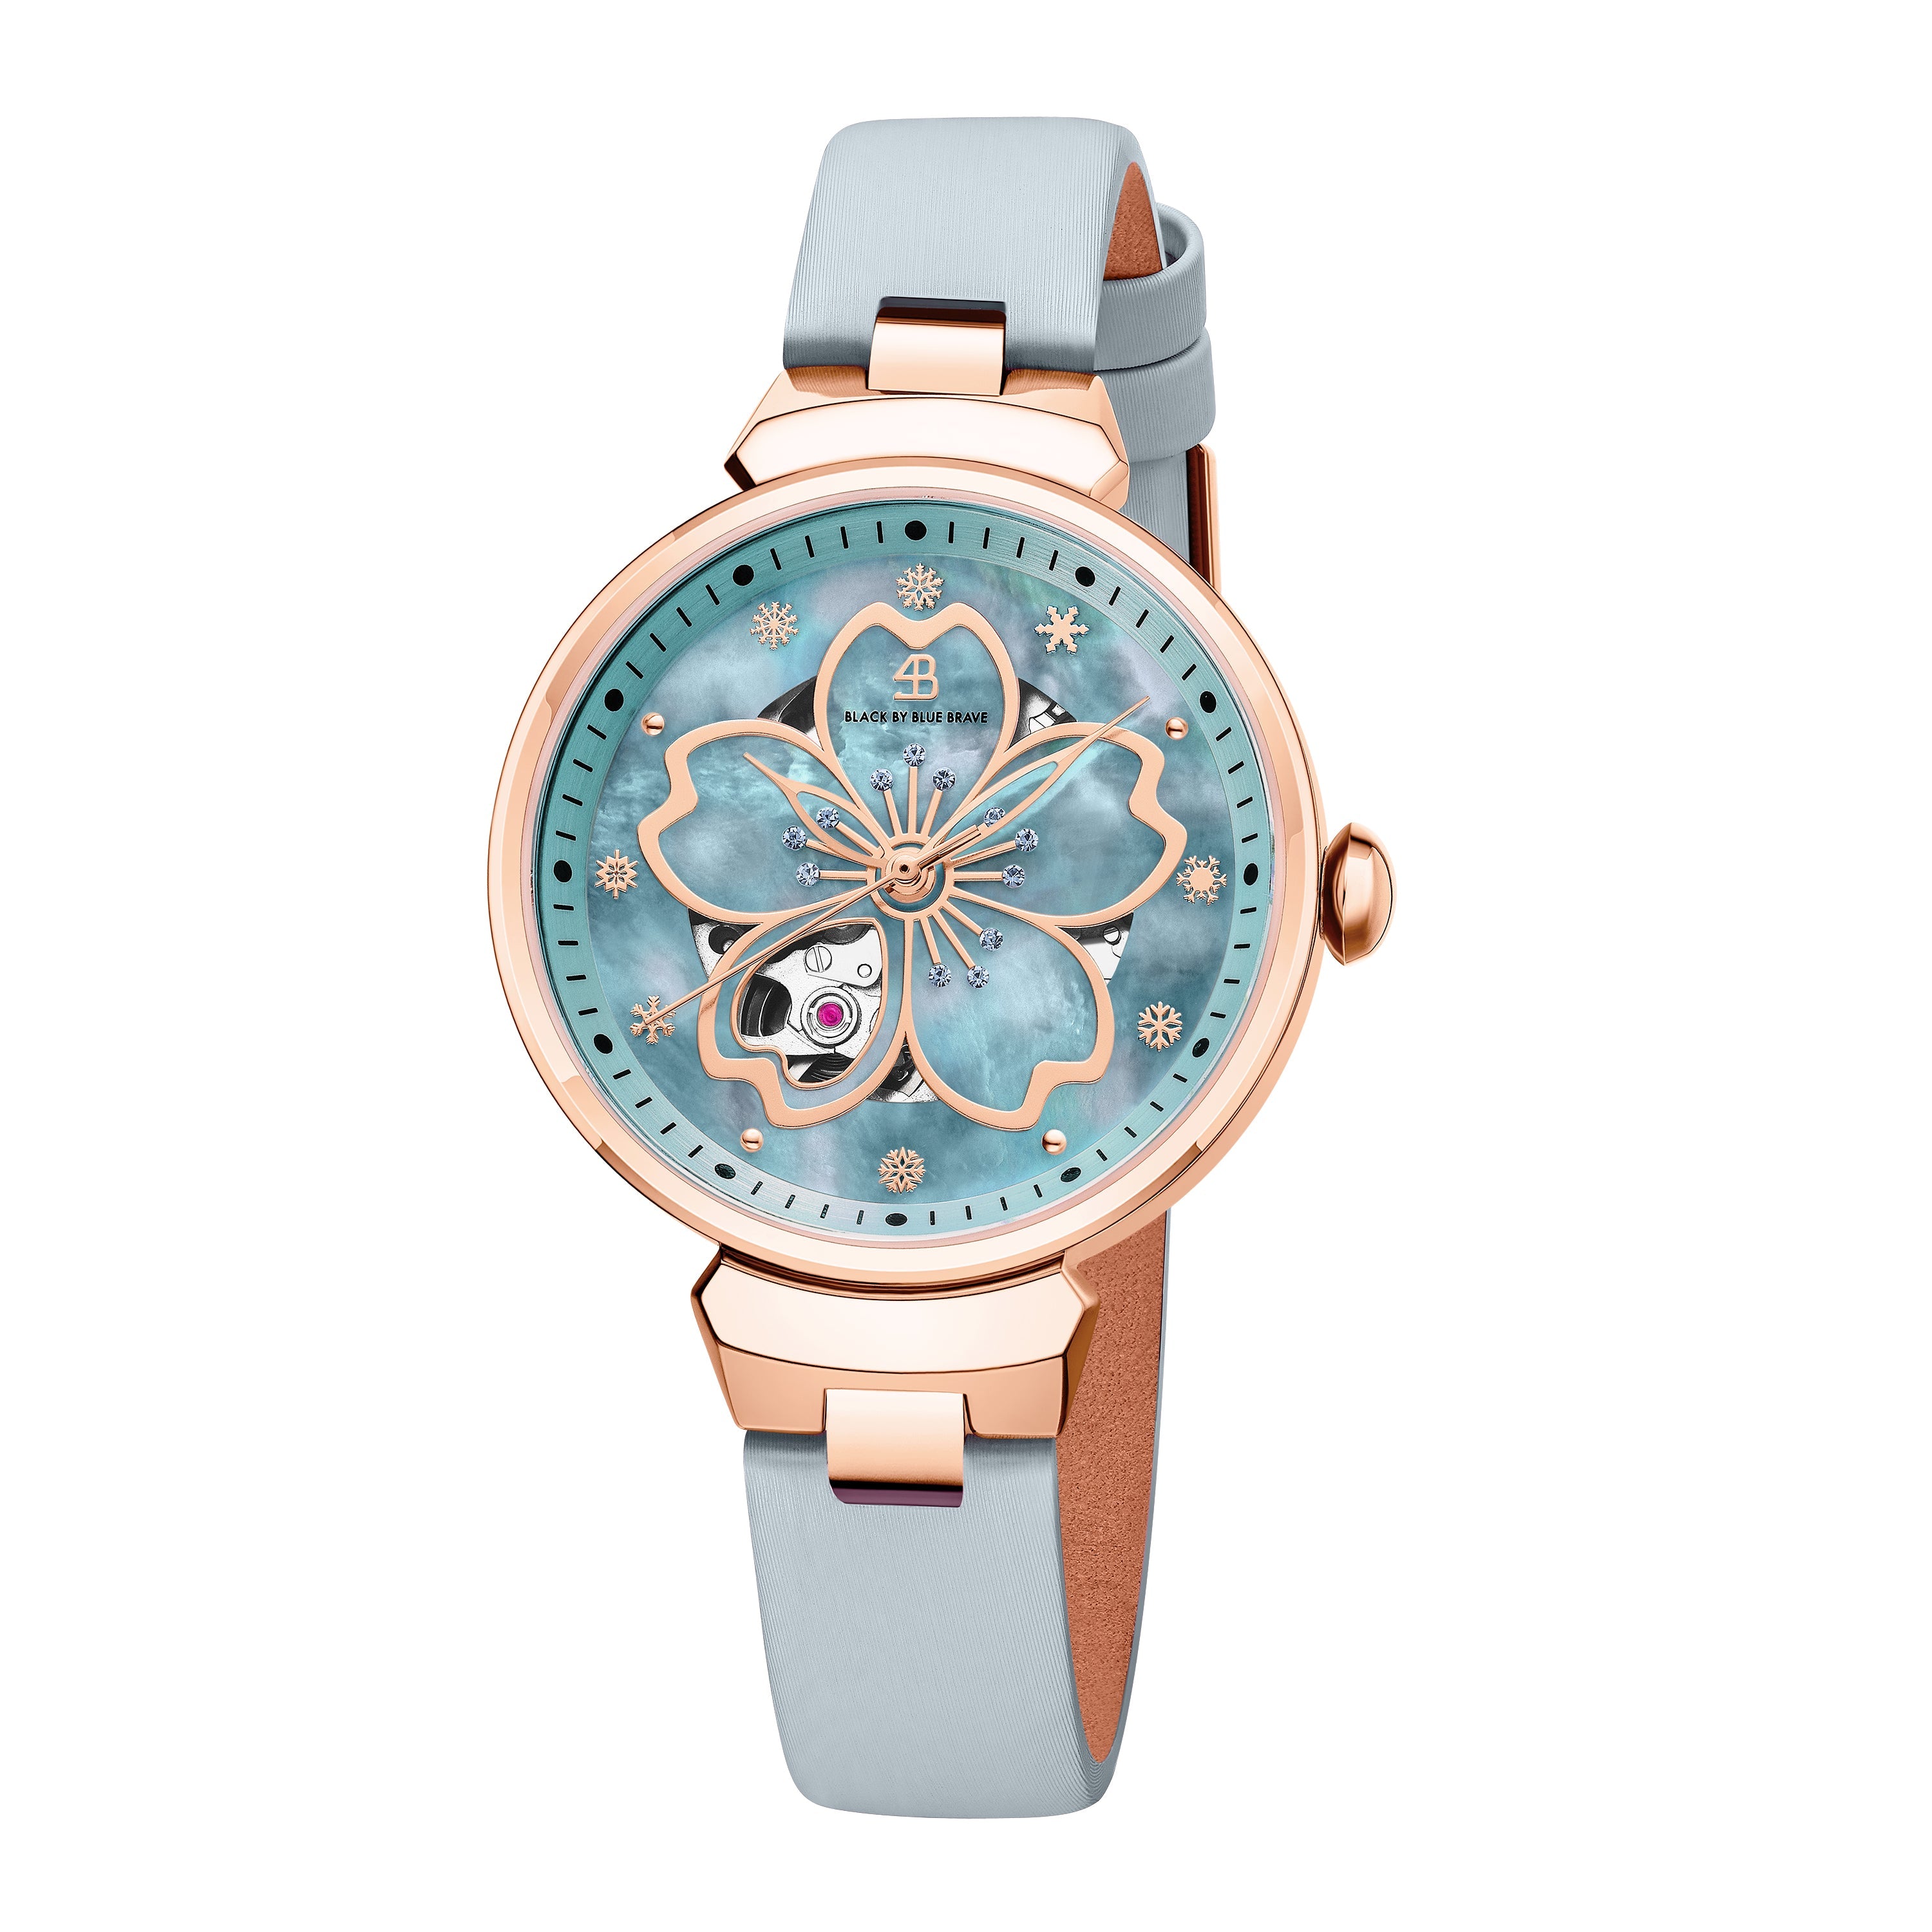 Blue Cherry Blossom 36mm Automatic Watch & Rosegold Bracelet & White Ceramic